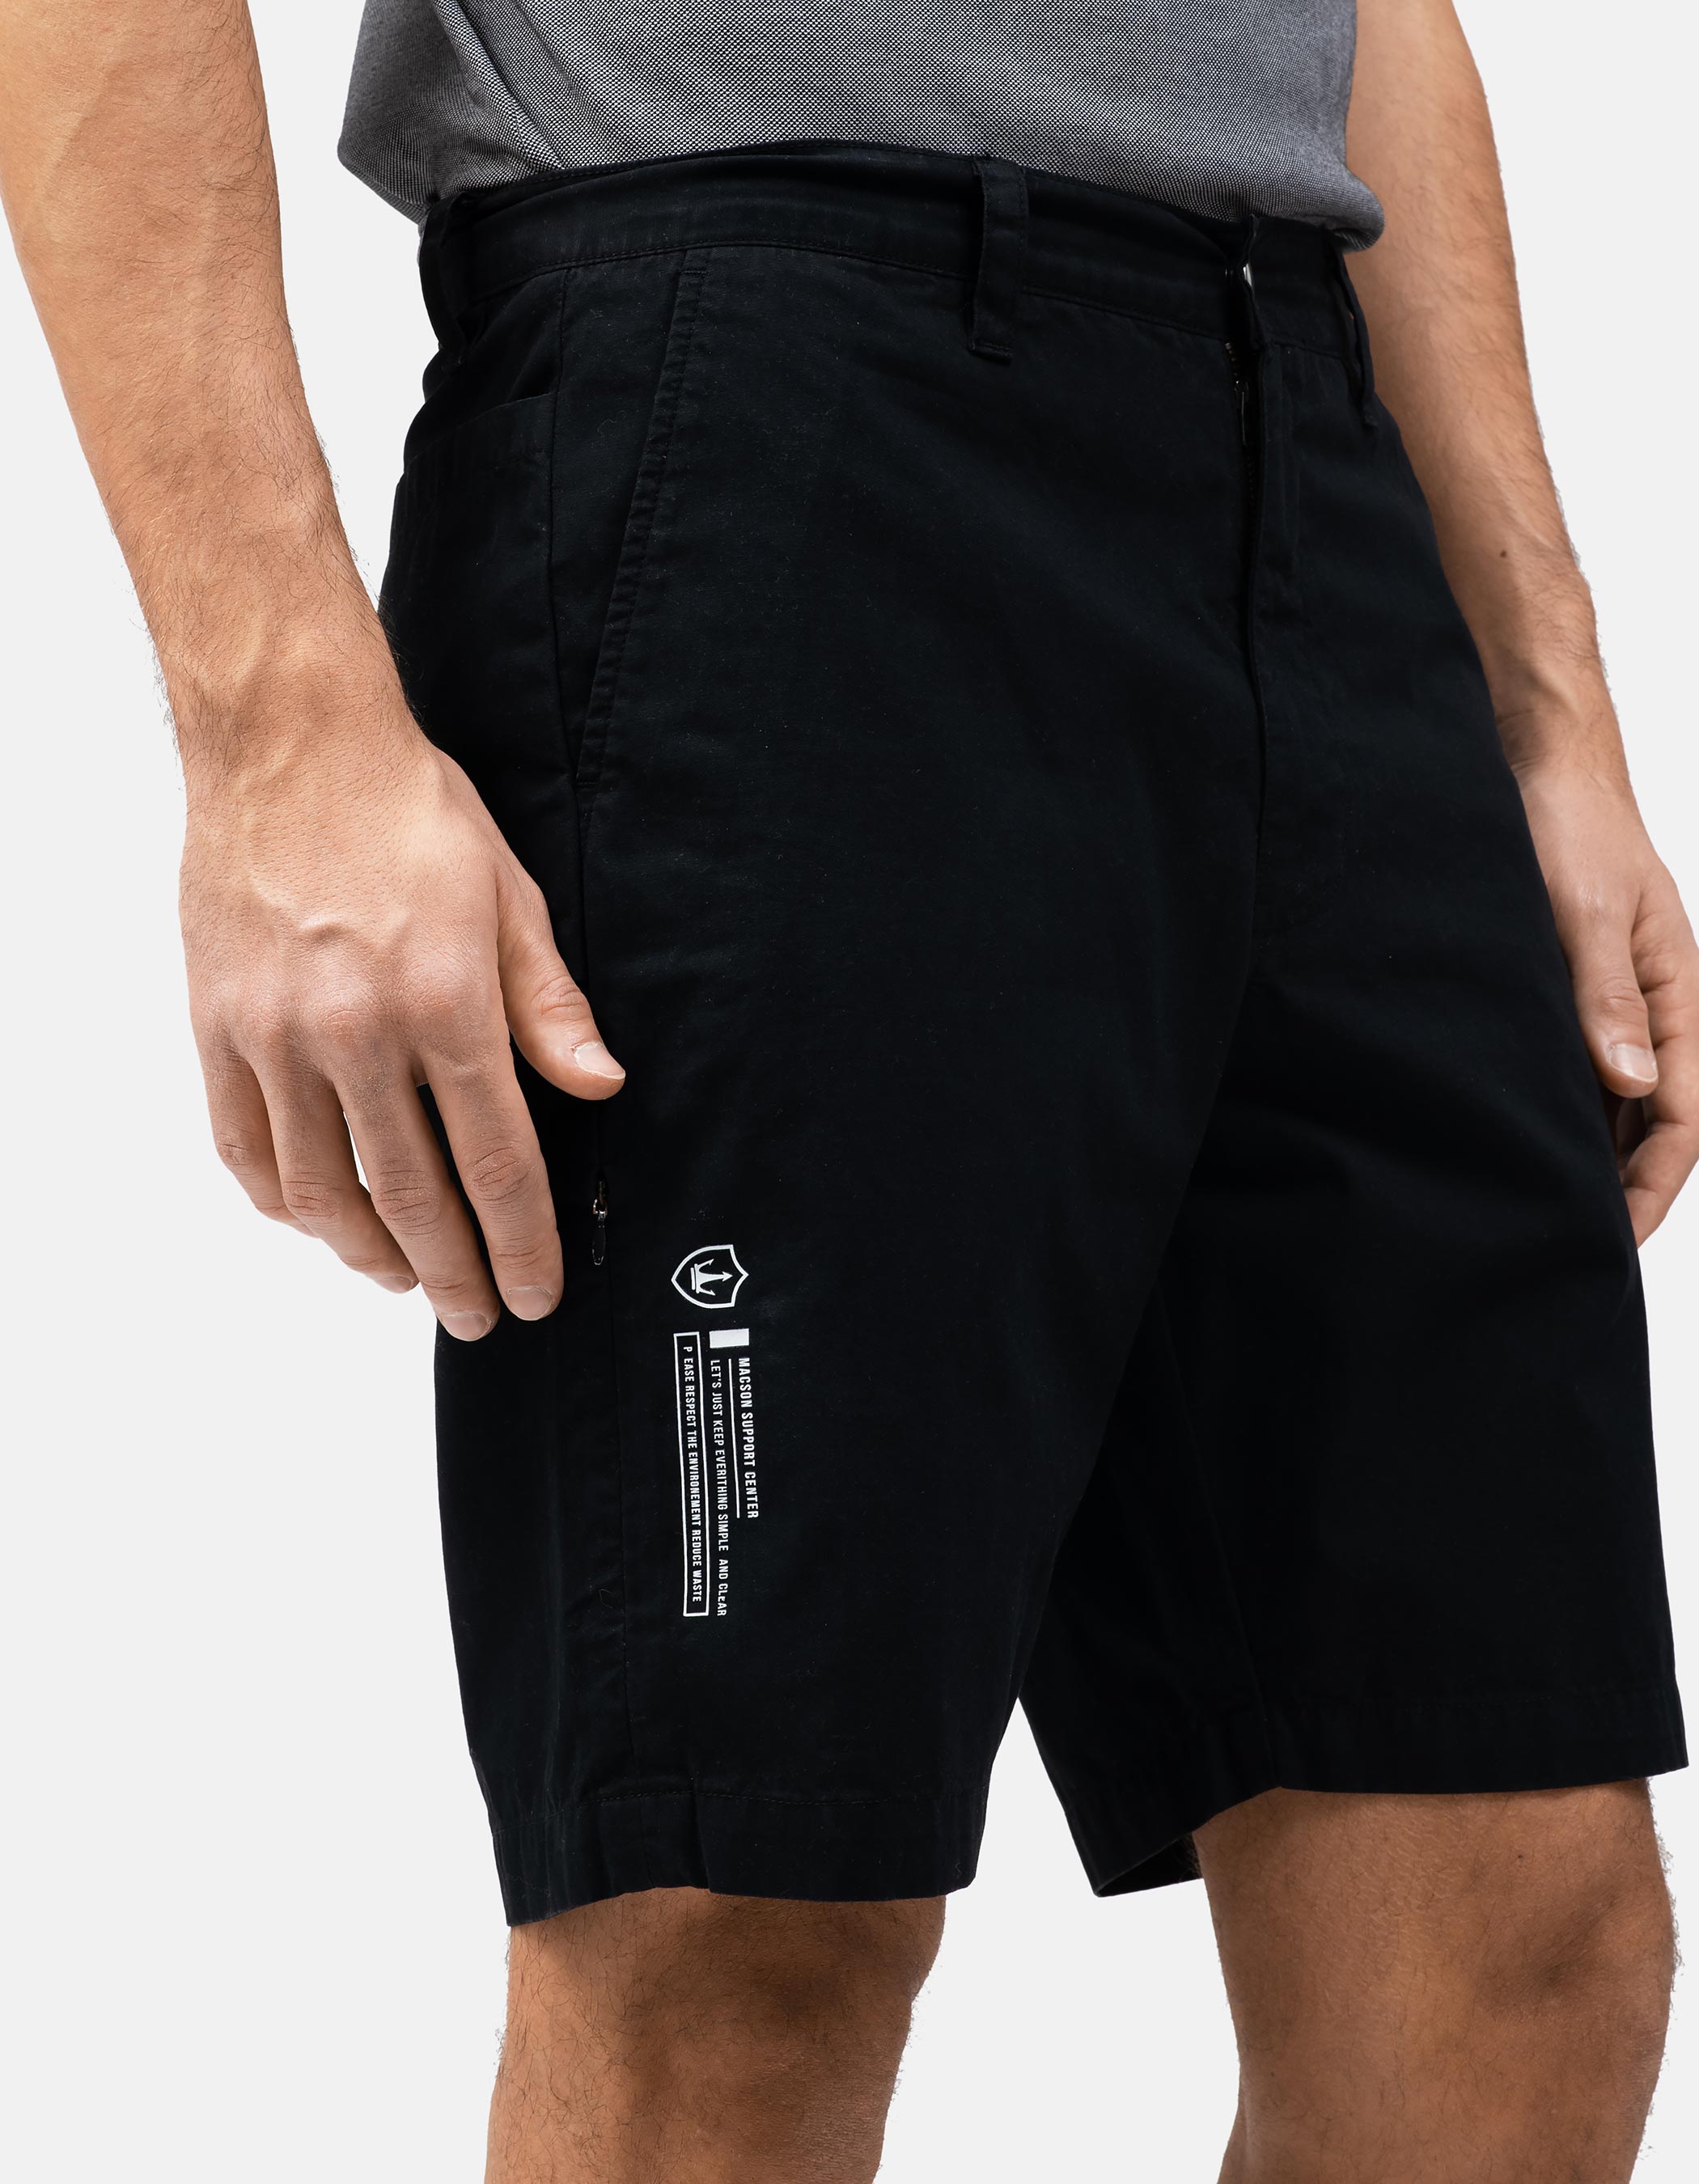 Bermuda shorts with hidden pocket 2